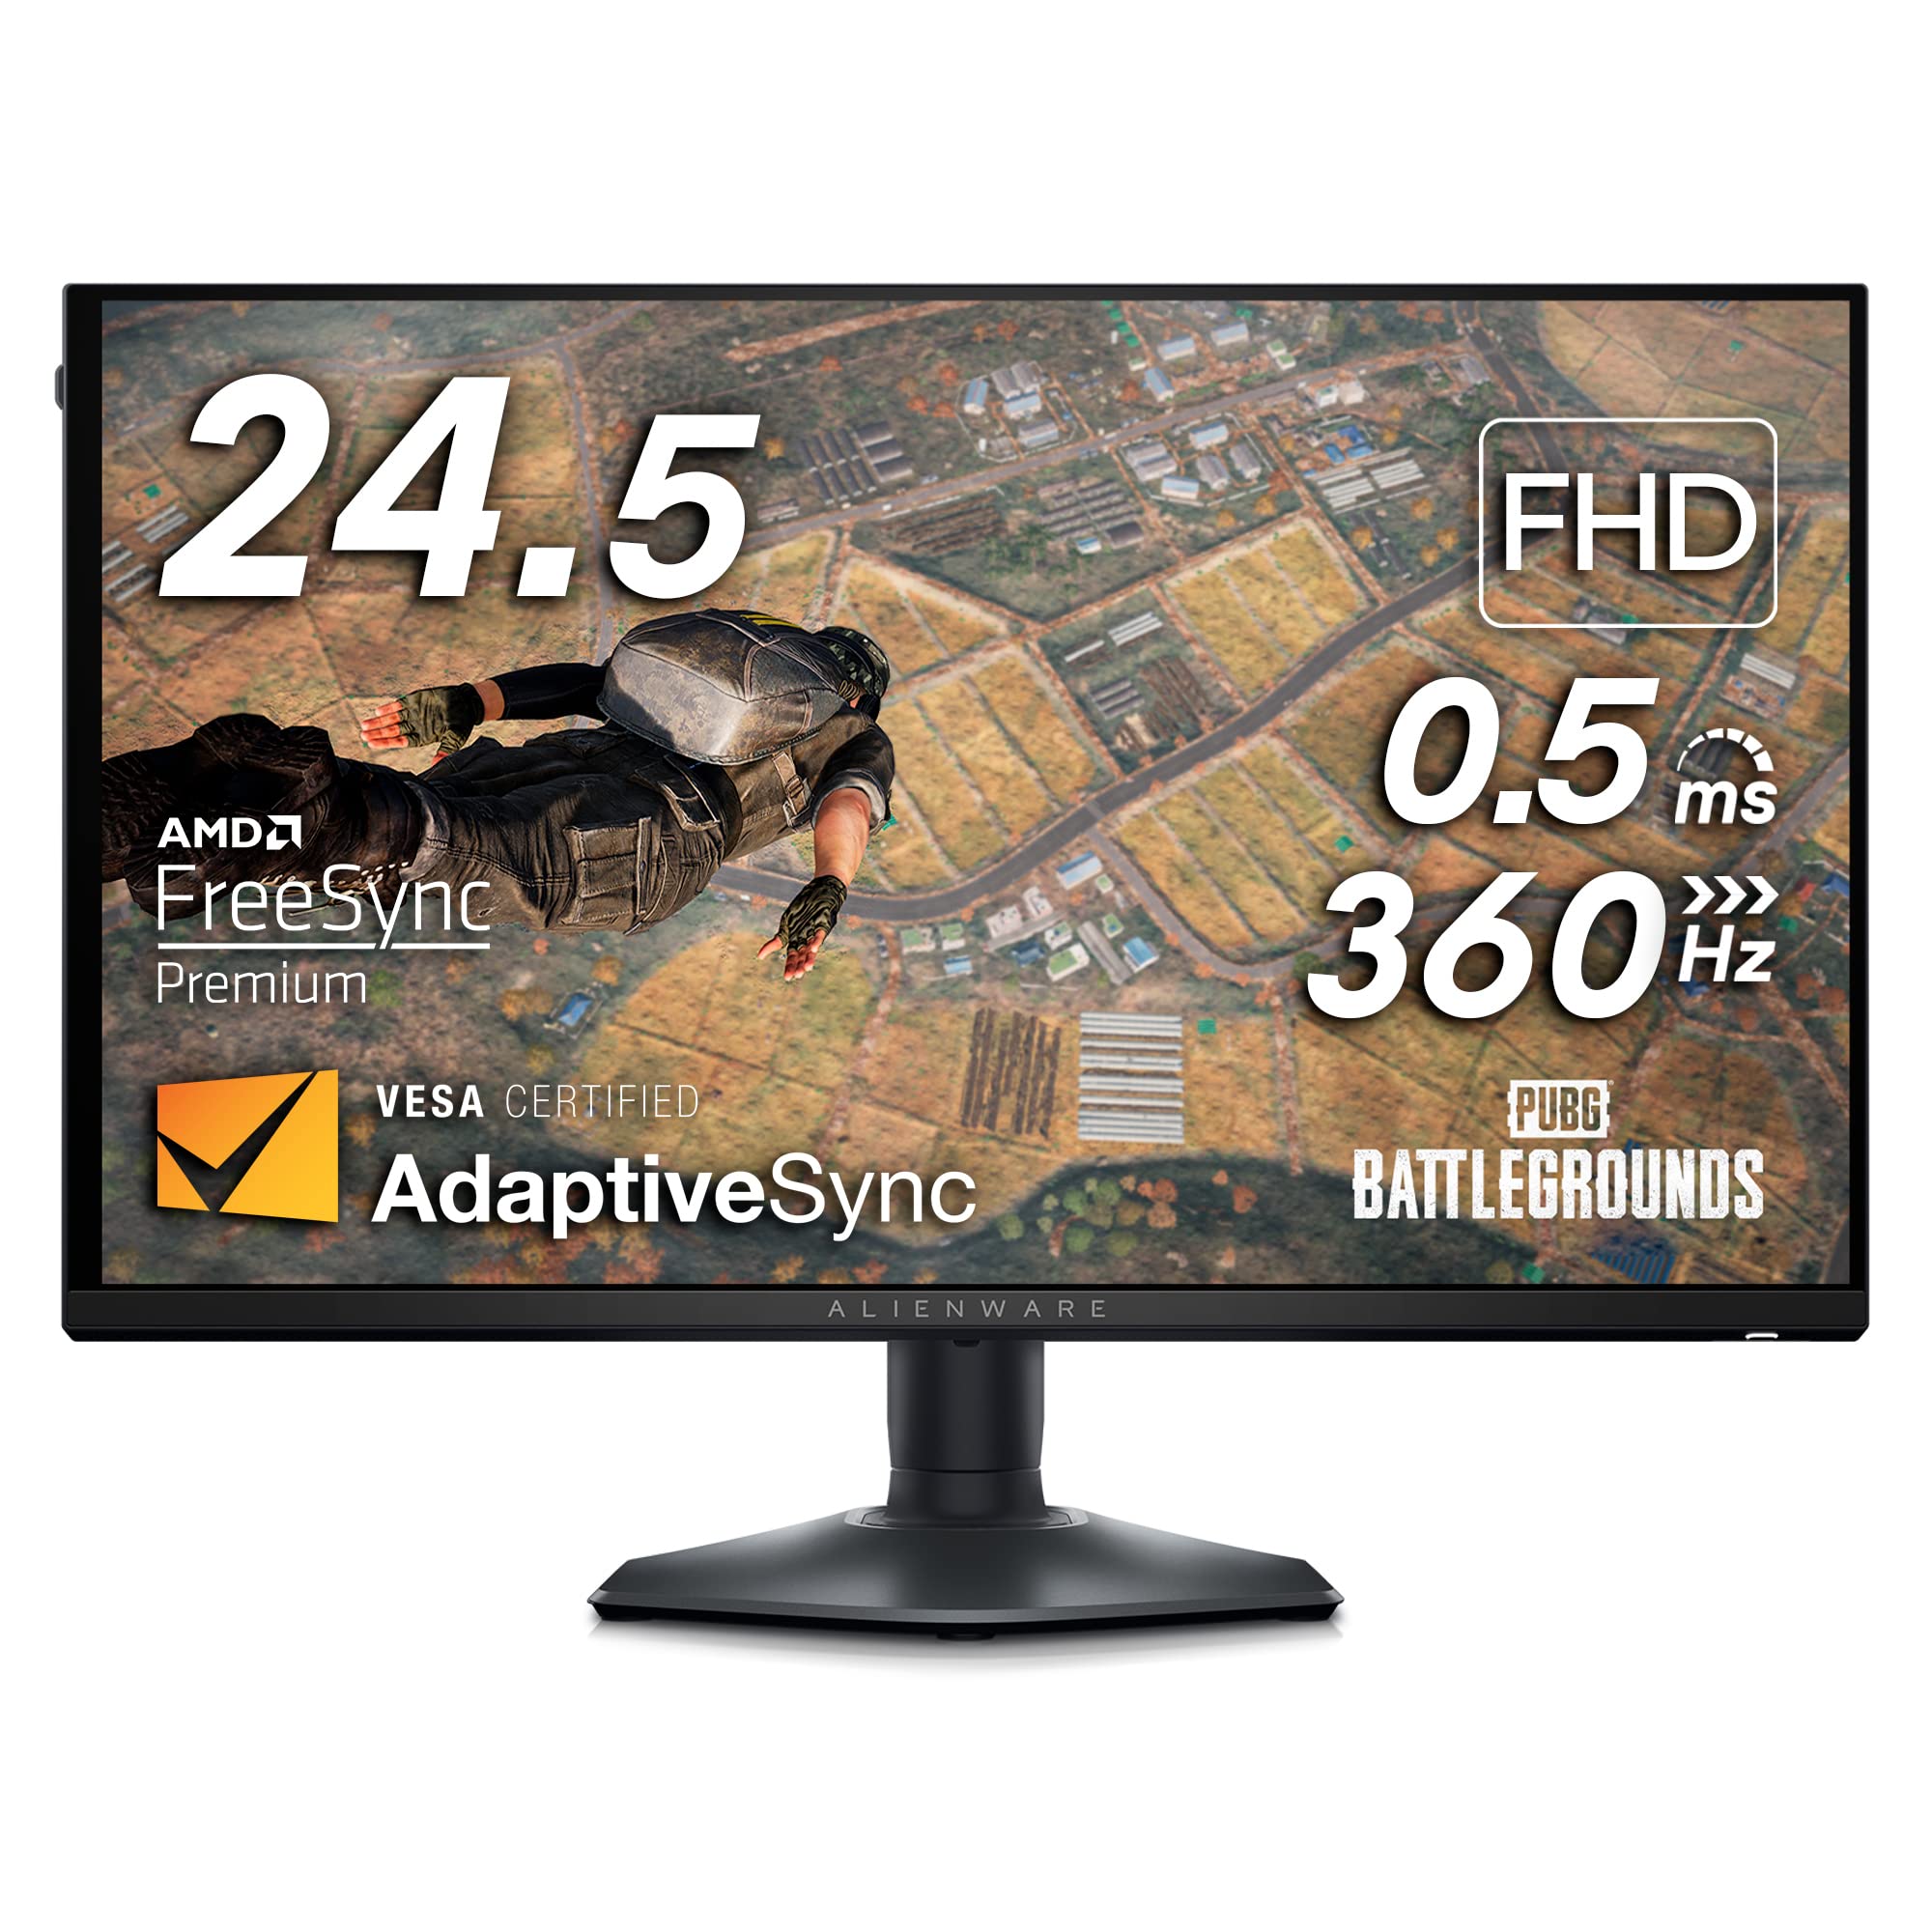 Alienware AW2523HF Gaming Monitor - 24.5-inch (1920x1080) 360Hz Display, AMD Free Sync, Height/Tilt/Swivel/Pivot Adjustability, Dark Side of The Moon